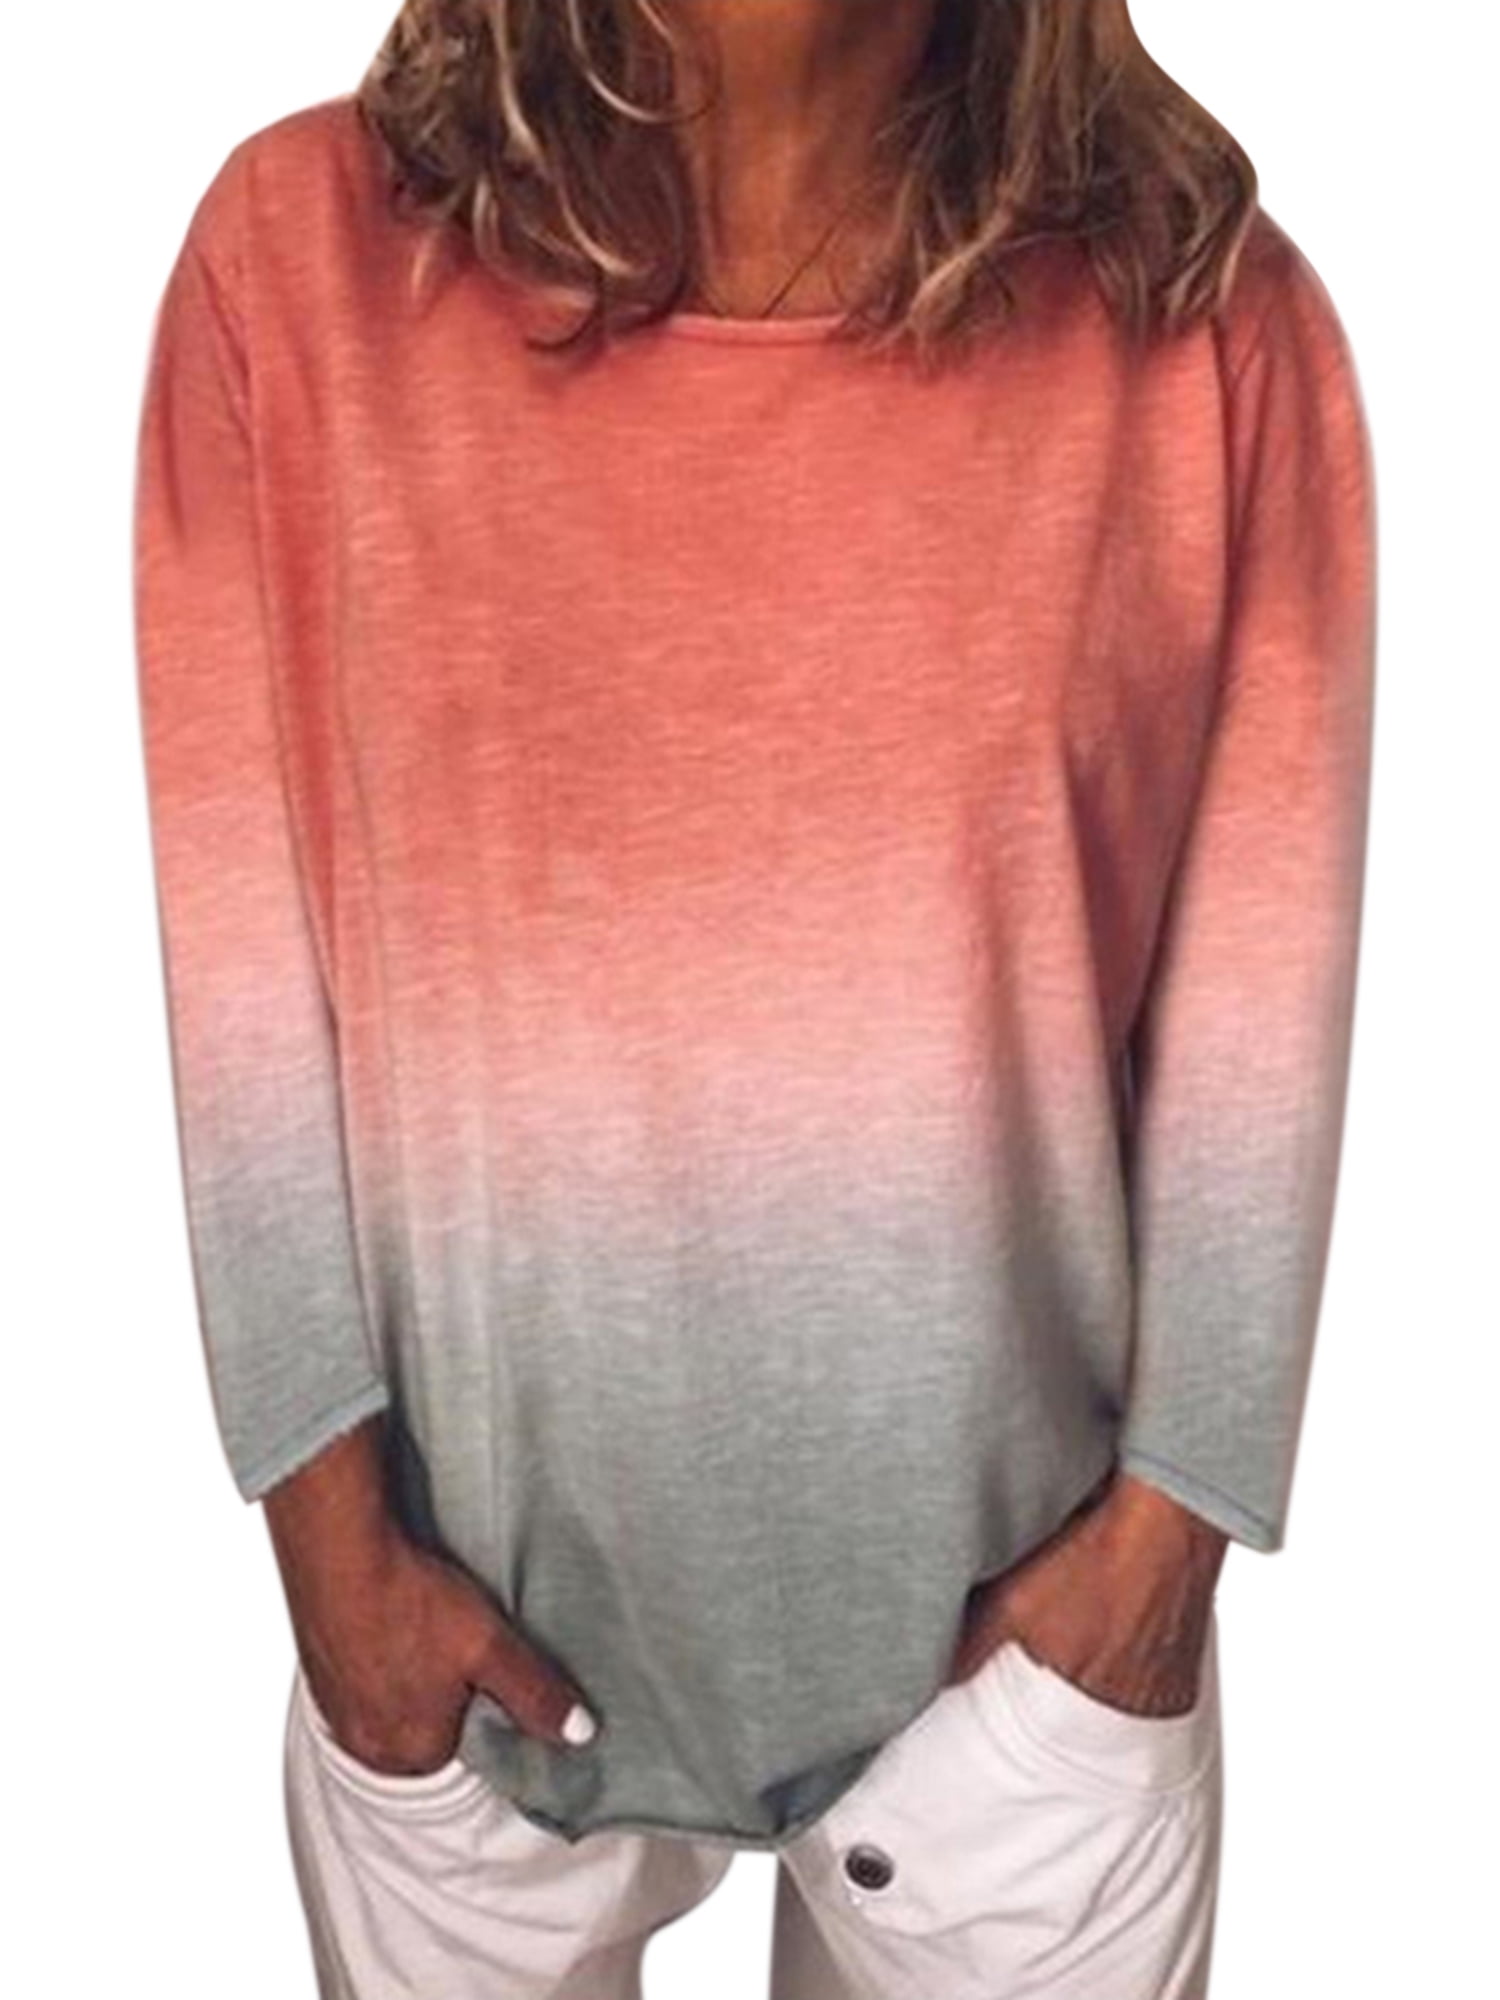 Juner Womens Casual O-Neck Gradient Contrast Color Long Sleeve Top Pullover Sweatshirt